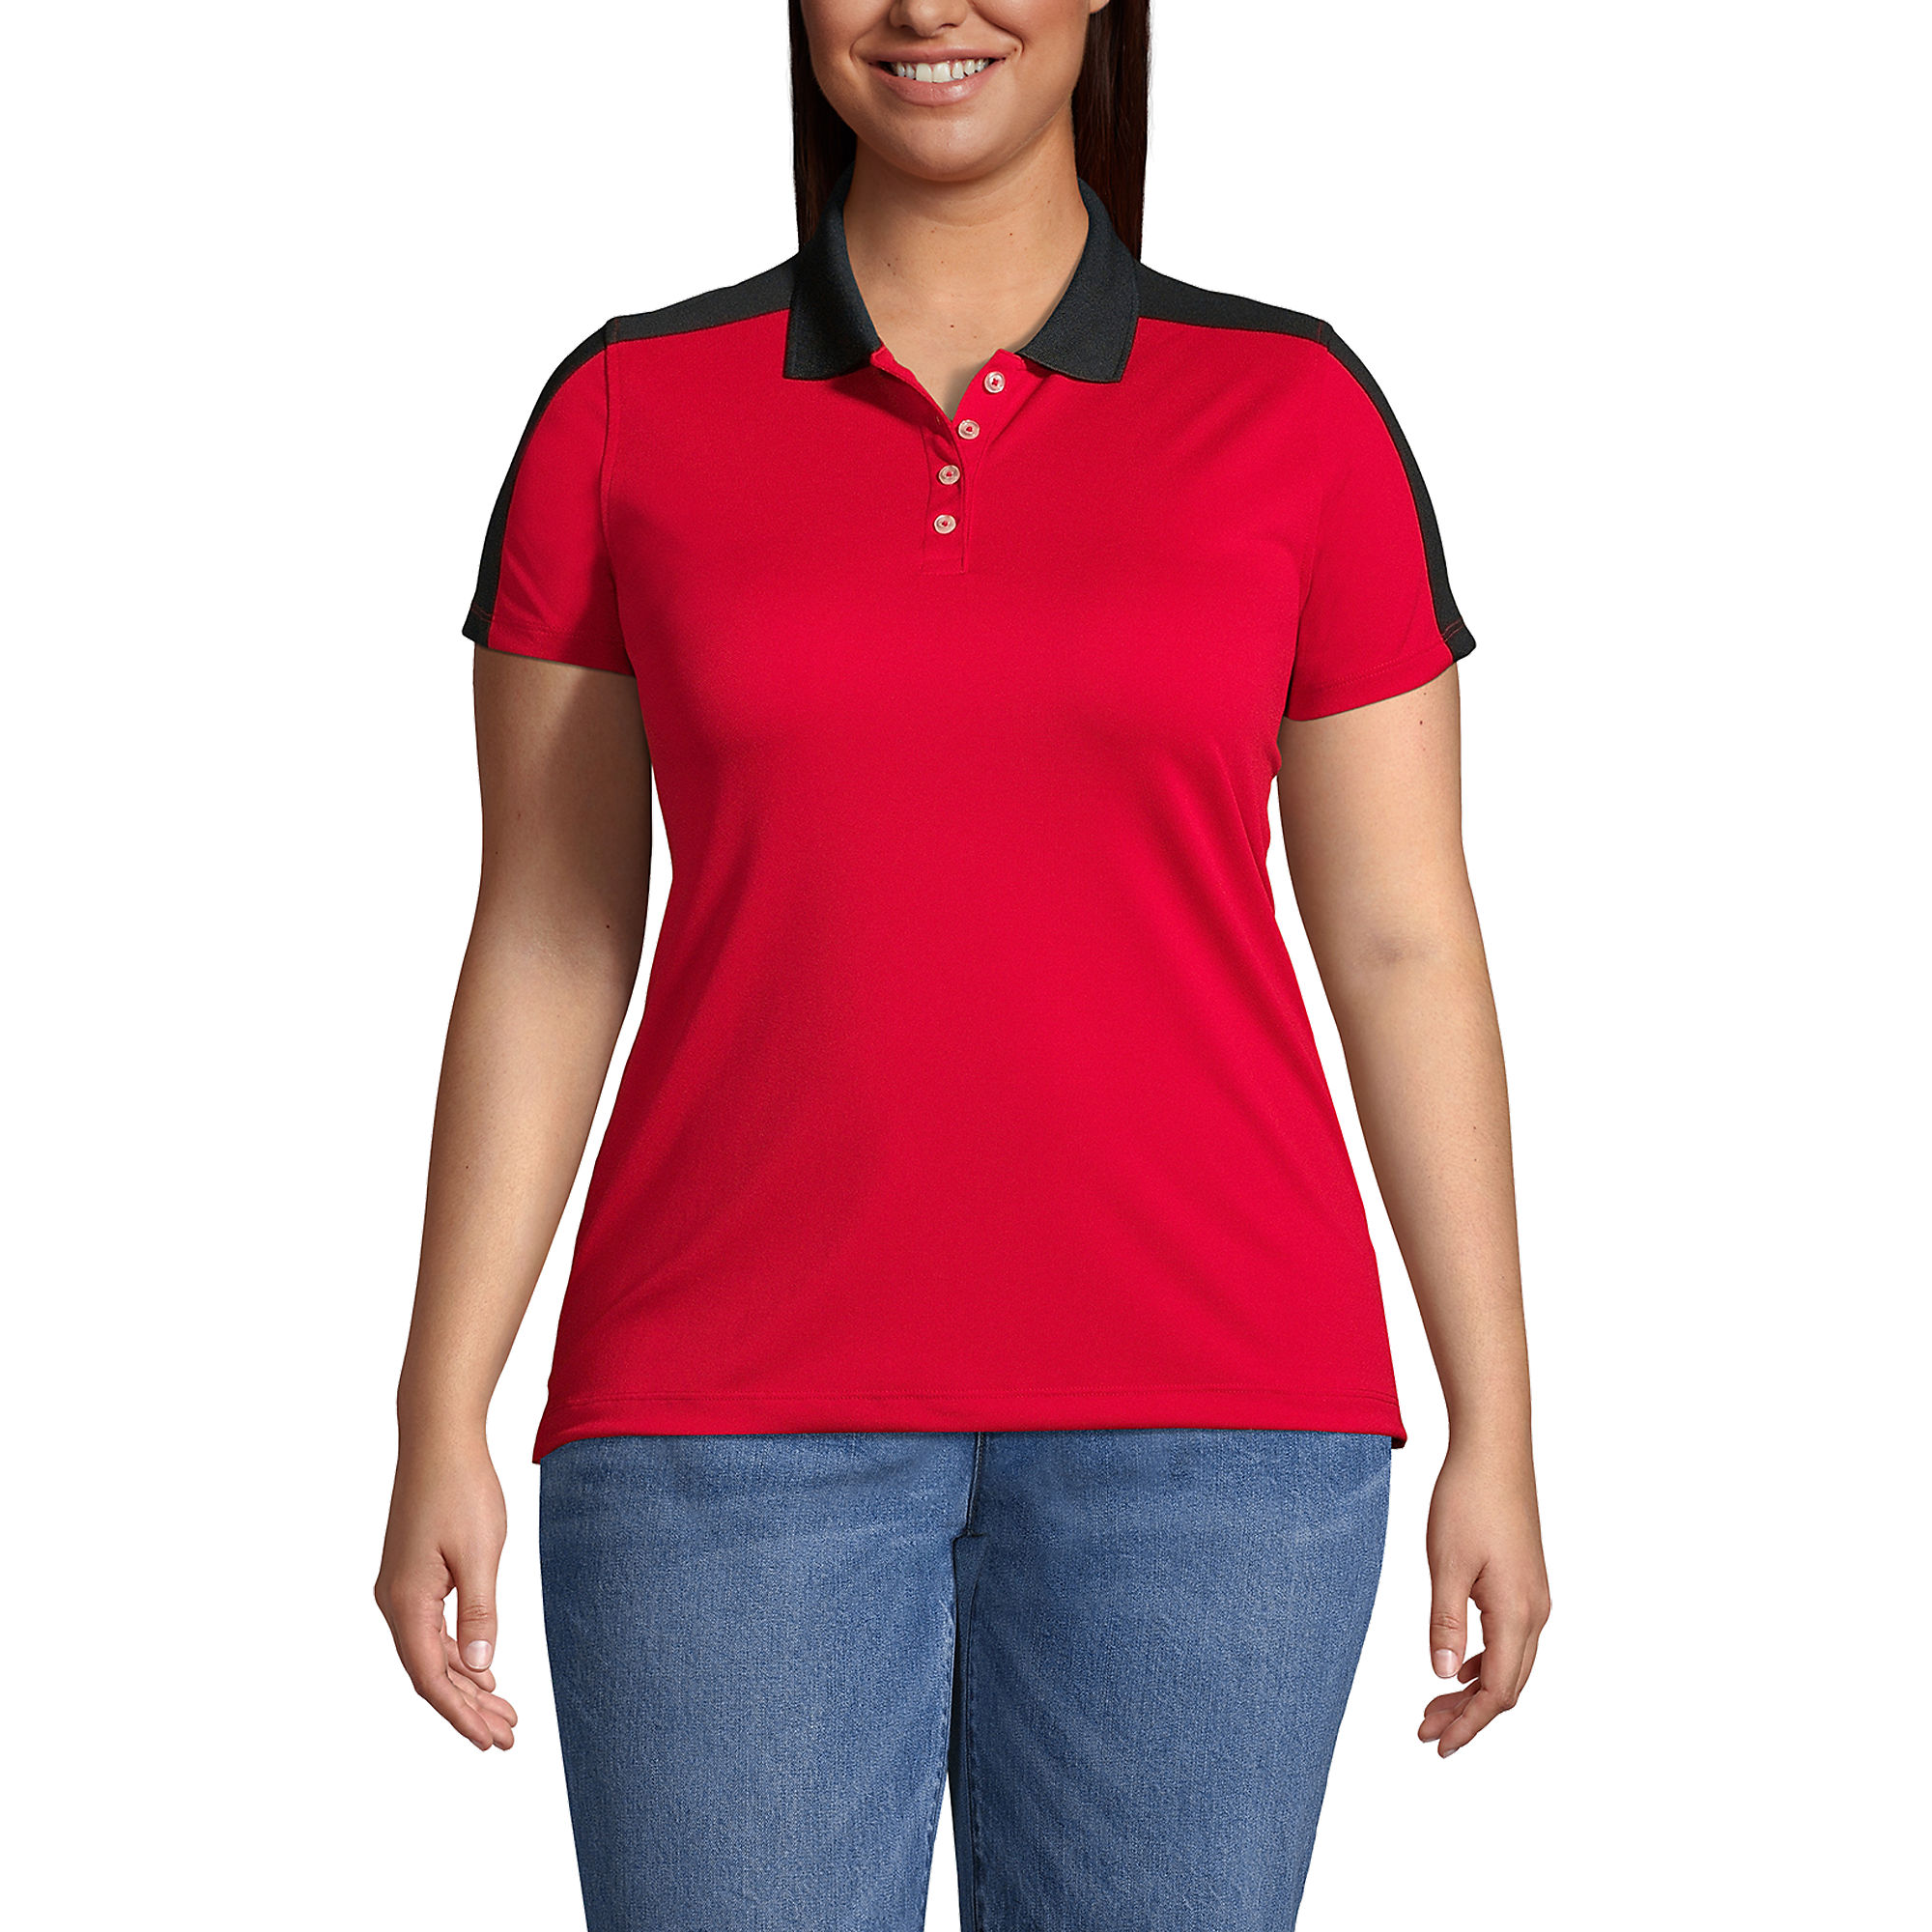 Lands End Women's Plus Size Short Sleeve Color Block Polyester Polo Shirt (3 colors)